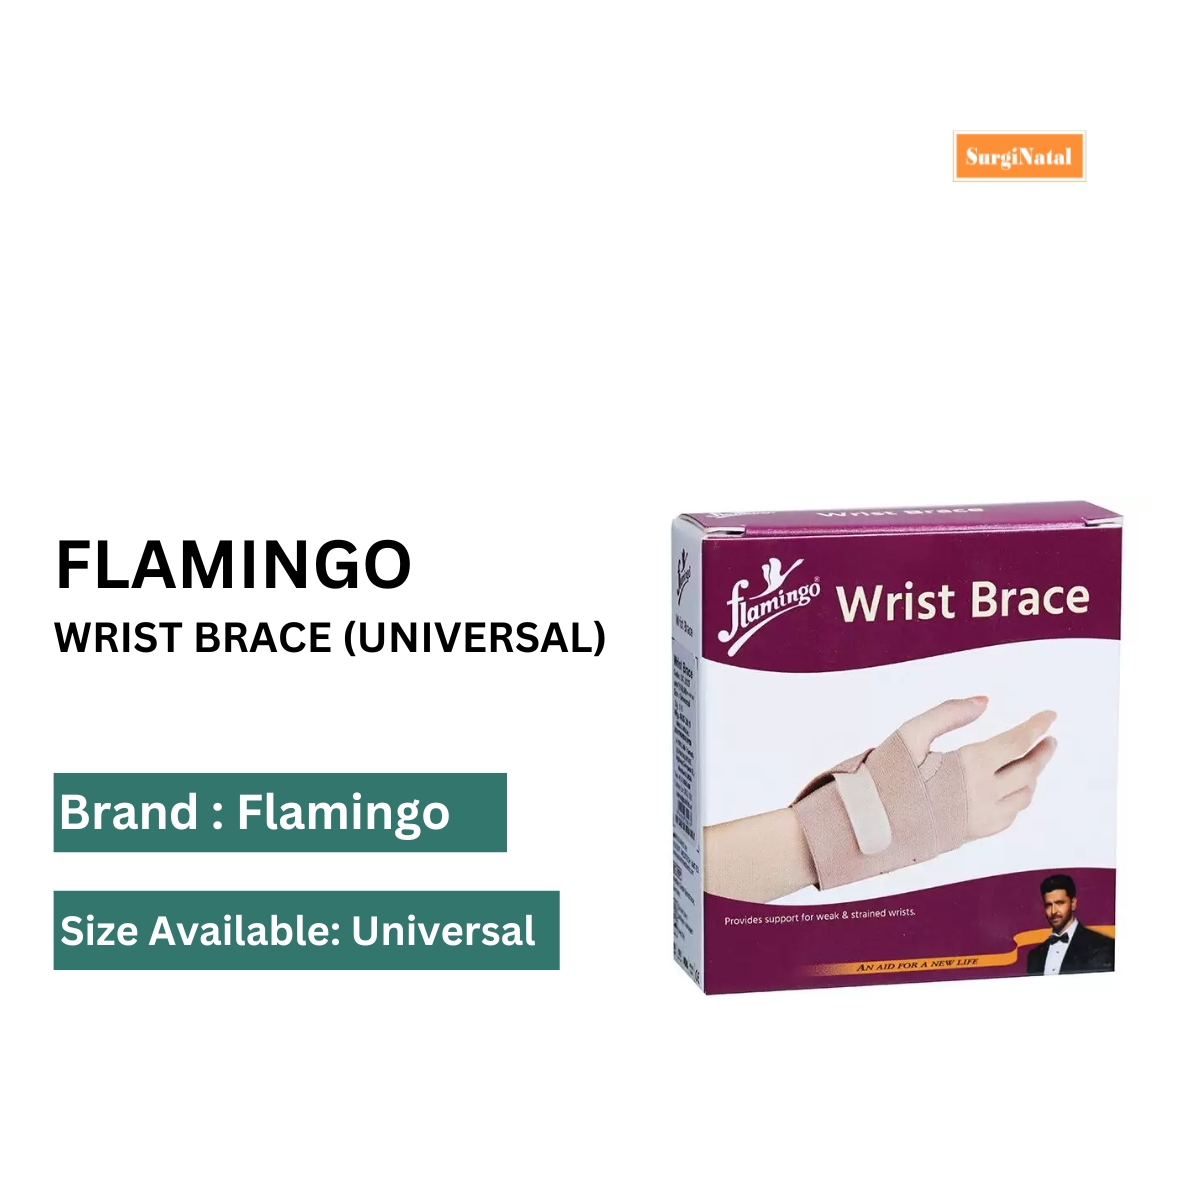 flamingo wrist brace (universal)